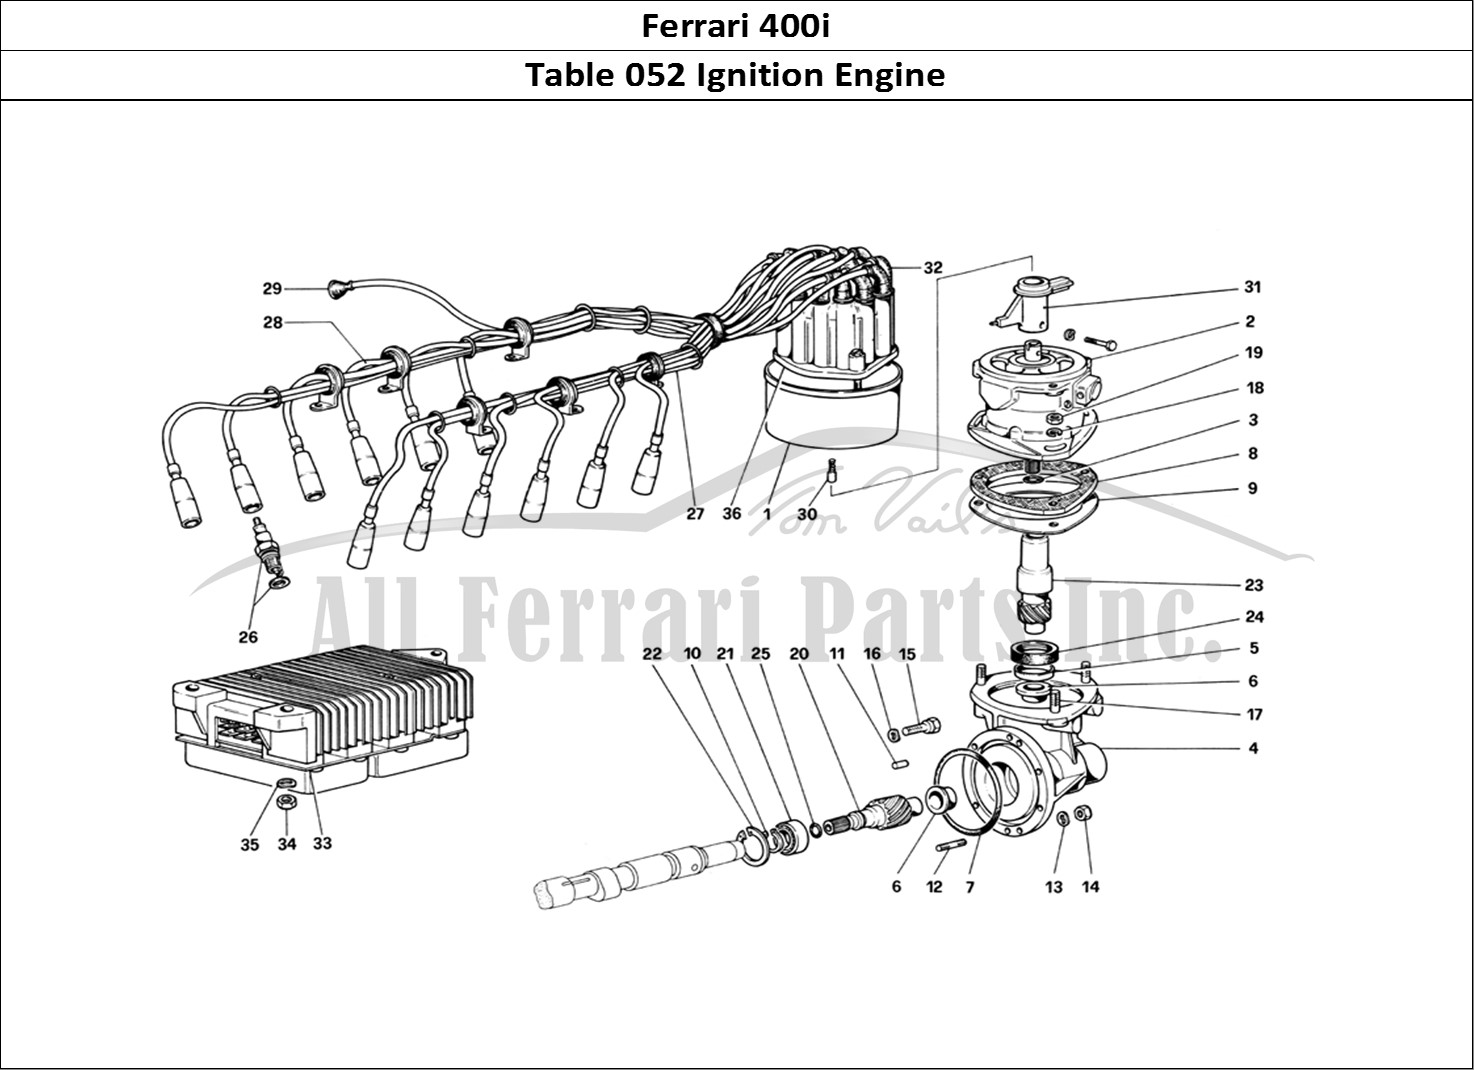 Ferrari Parts Ferrari 400i (1983 Mechanical) Page 052 Engine Ignition